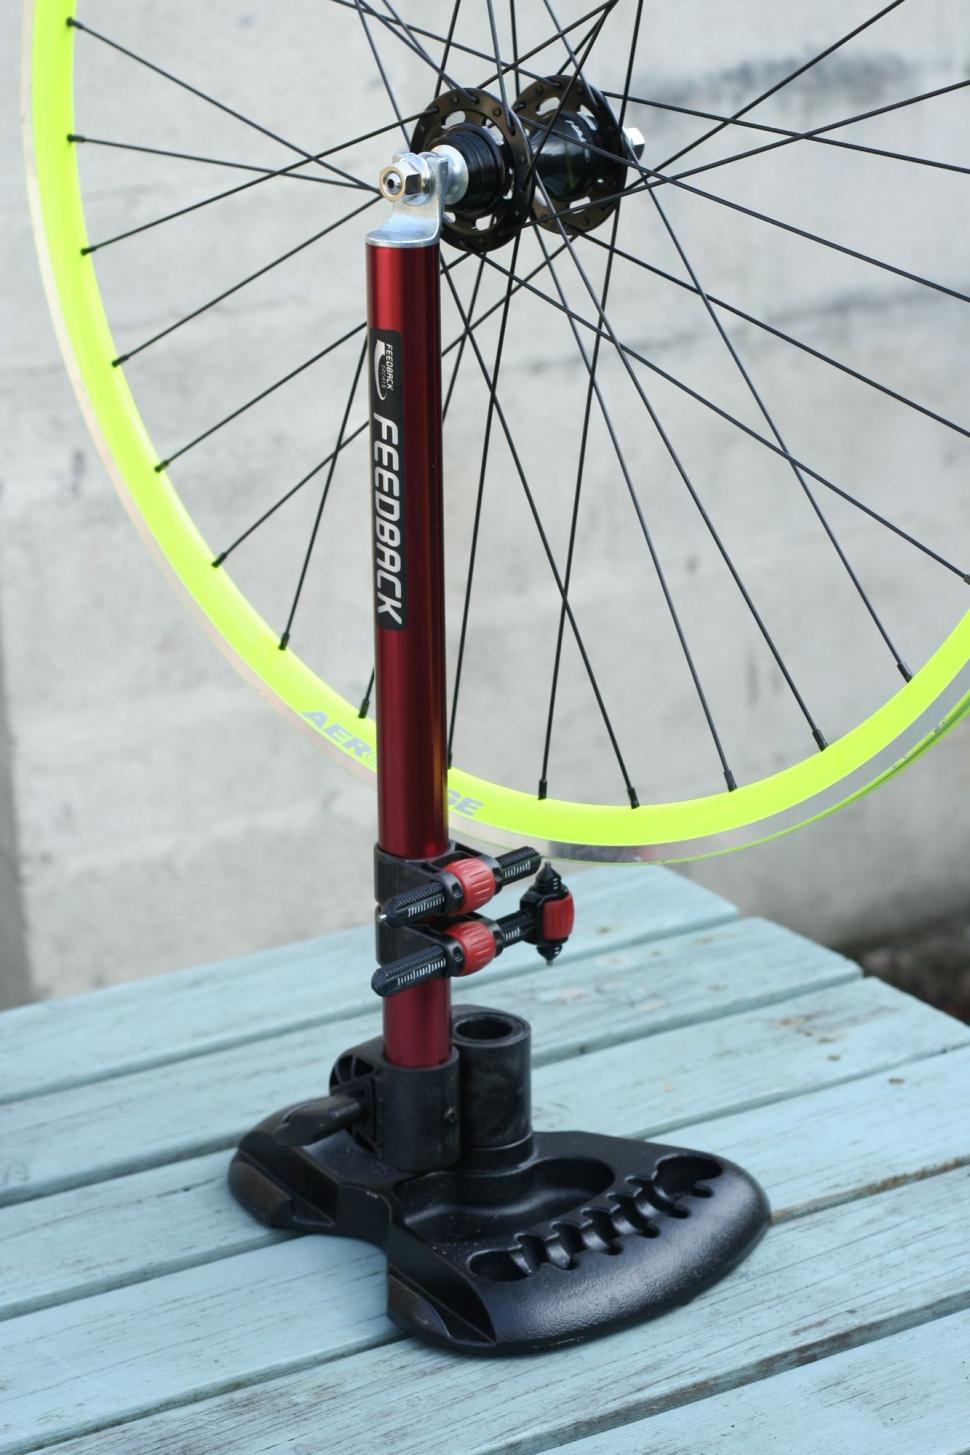 truing a bike wheel at home